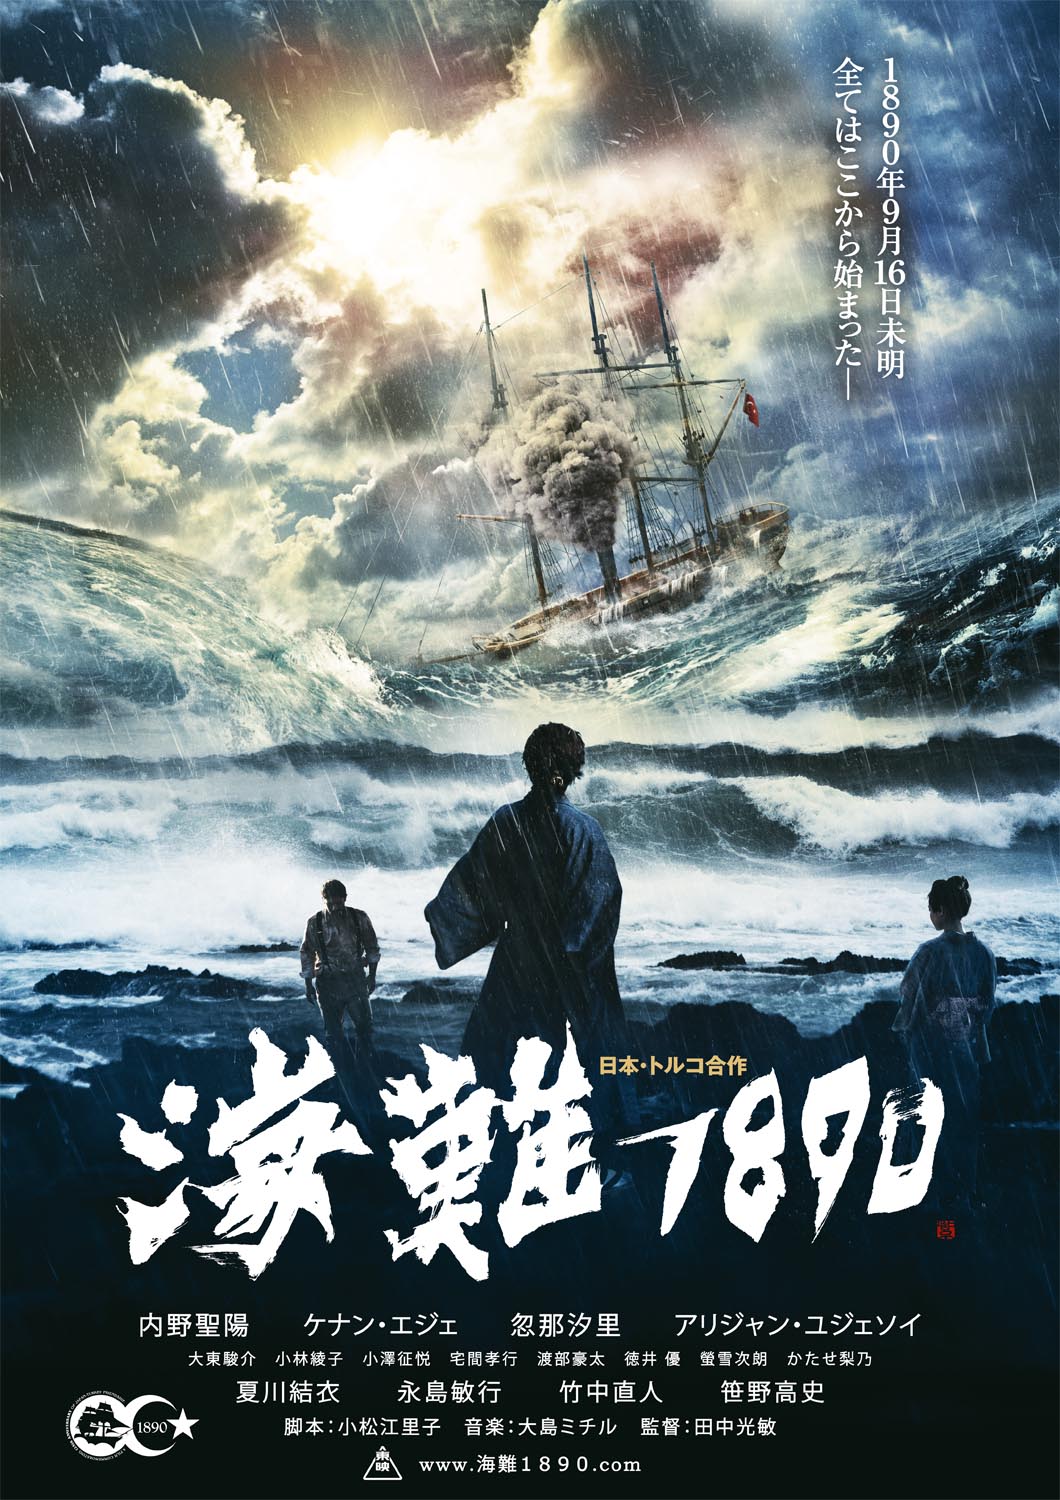 Ertuğrul 1890 film afişi (海難１８９０)